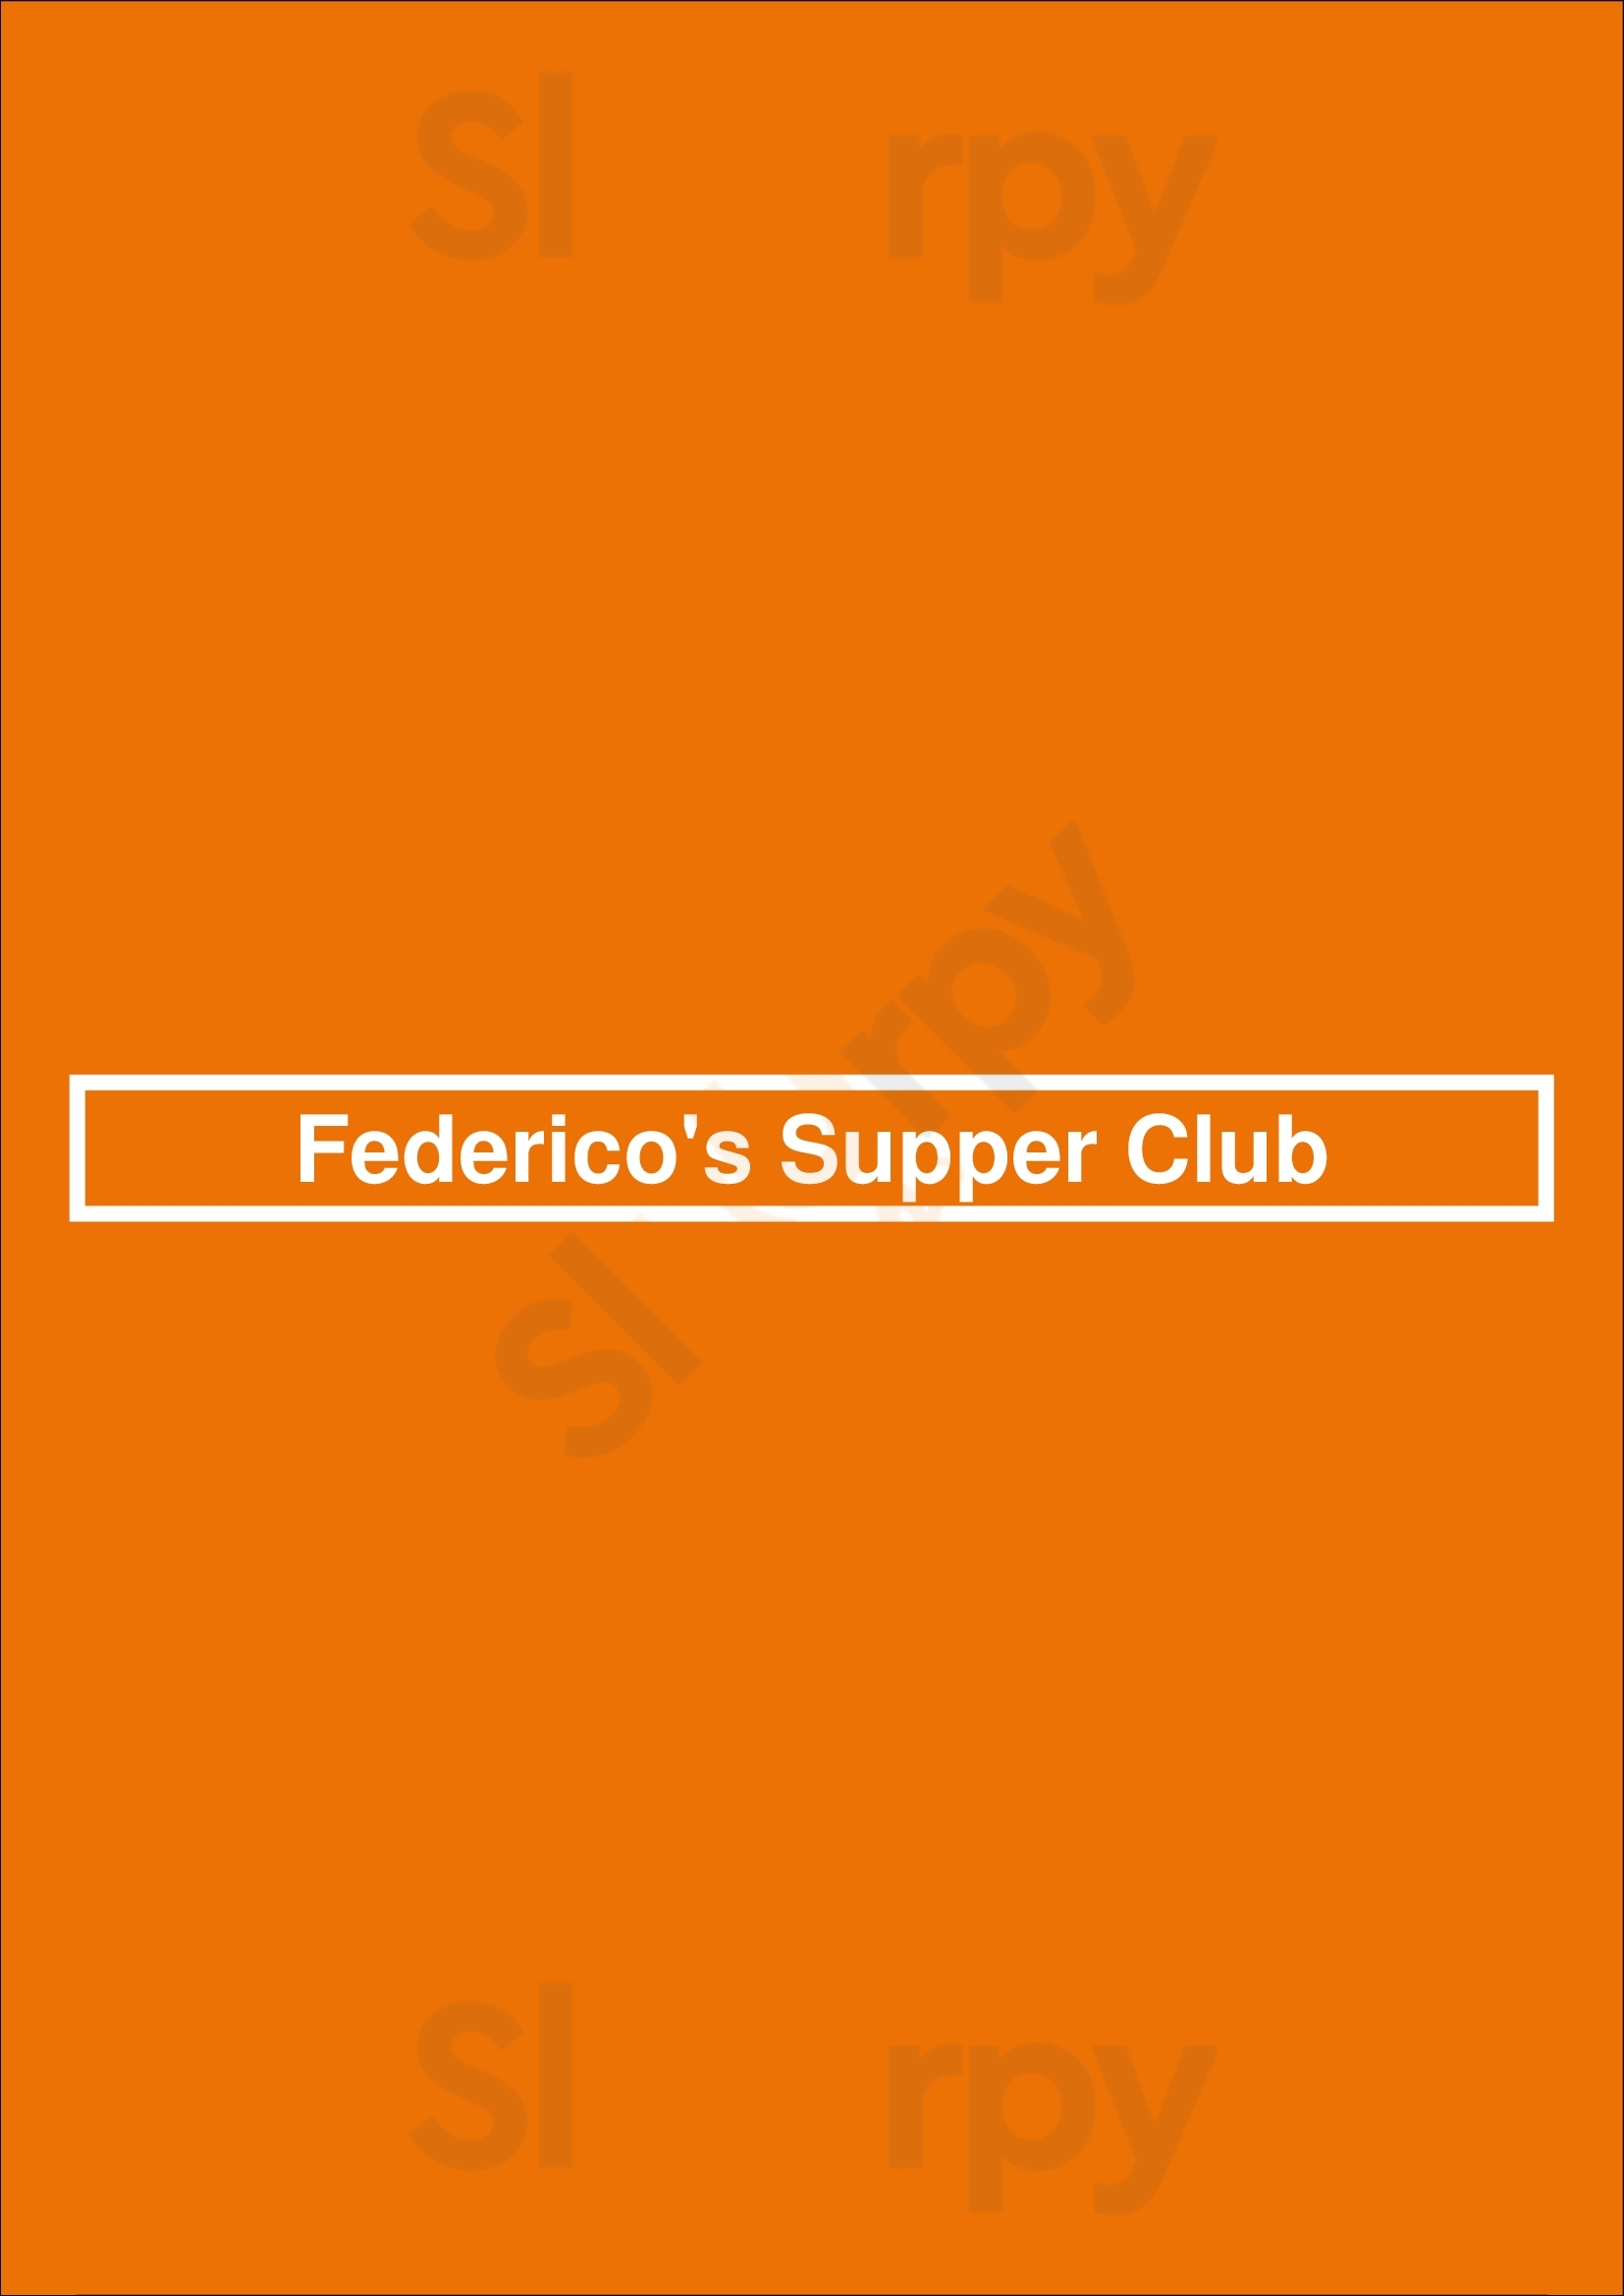 Federico's Supper Club Vancouver Menu - 1